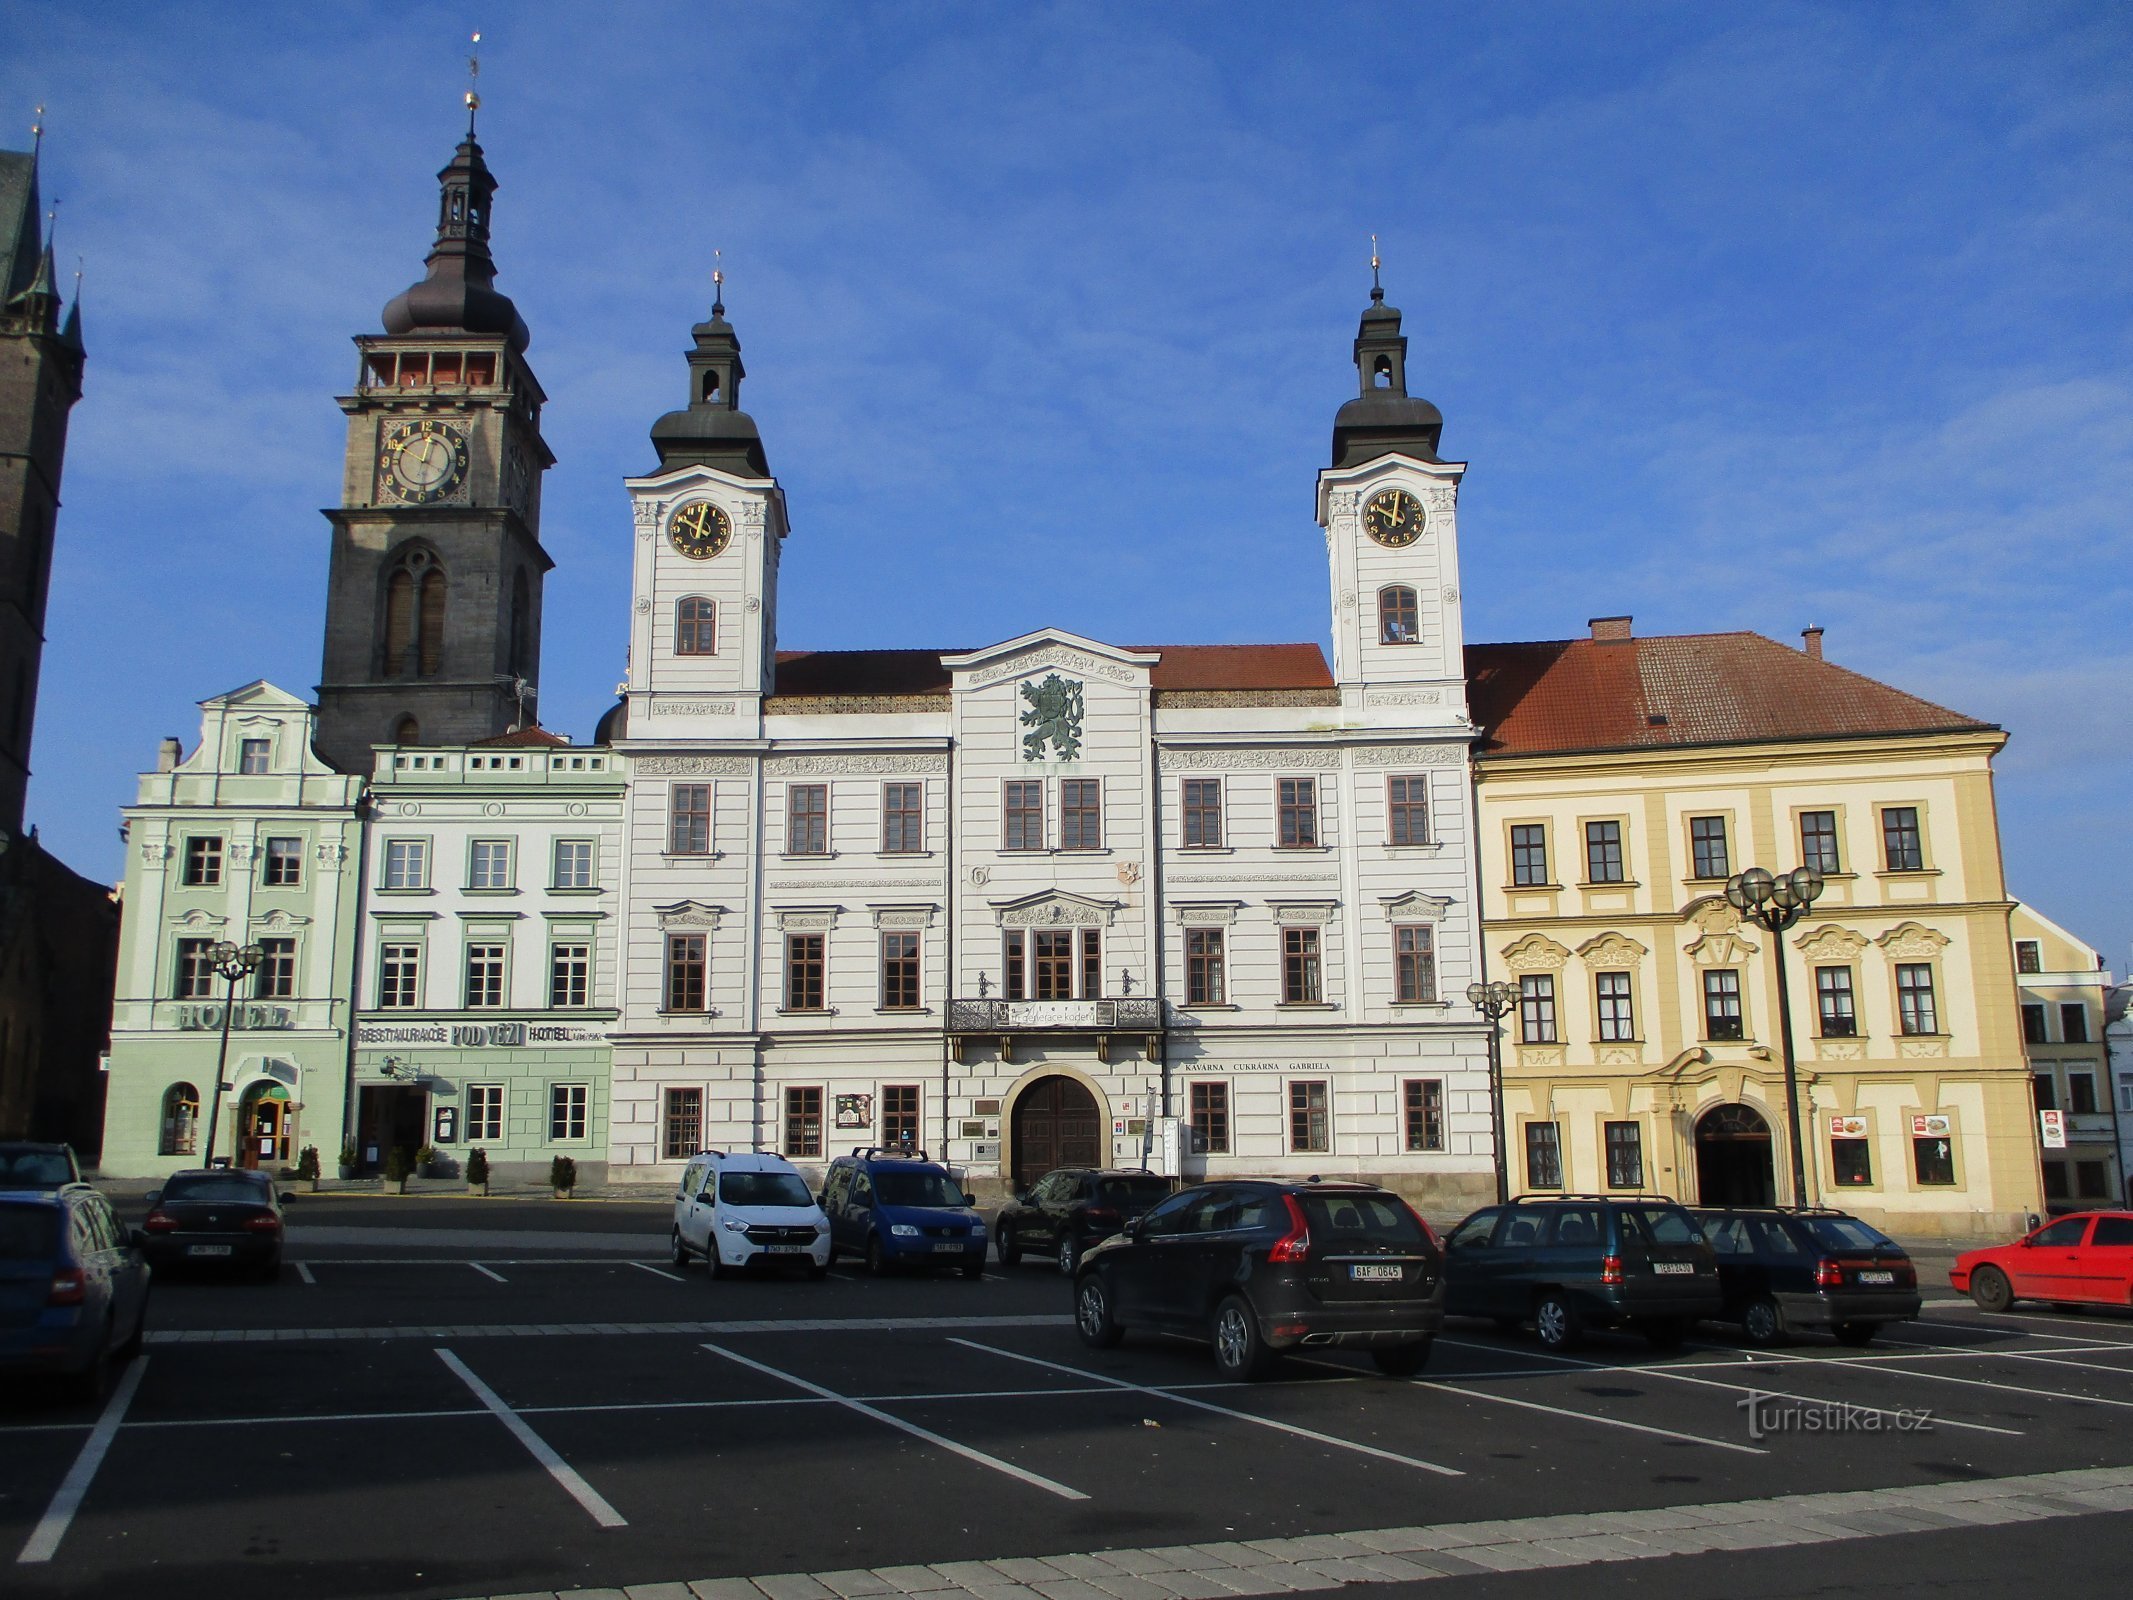 Die westliche Häuserreihe in Velké náměstí (Hradec Králové, 9.2.2020. Februar XNUMX)